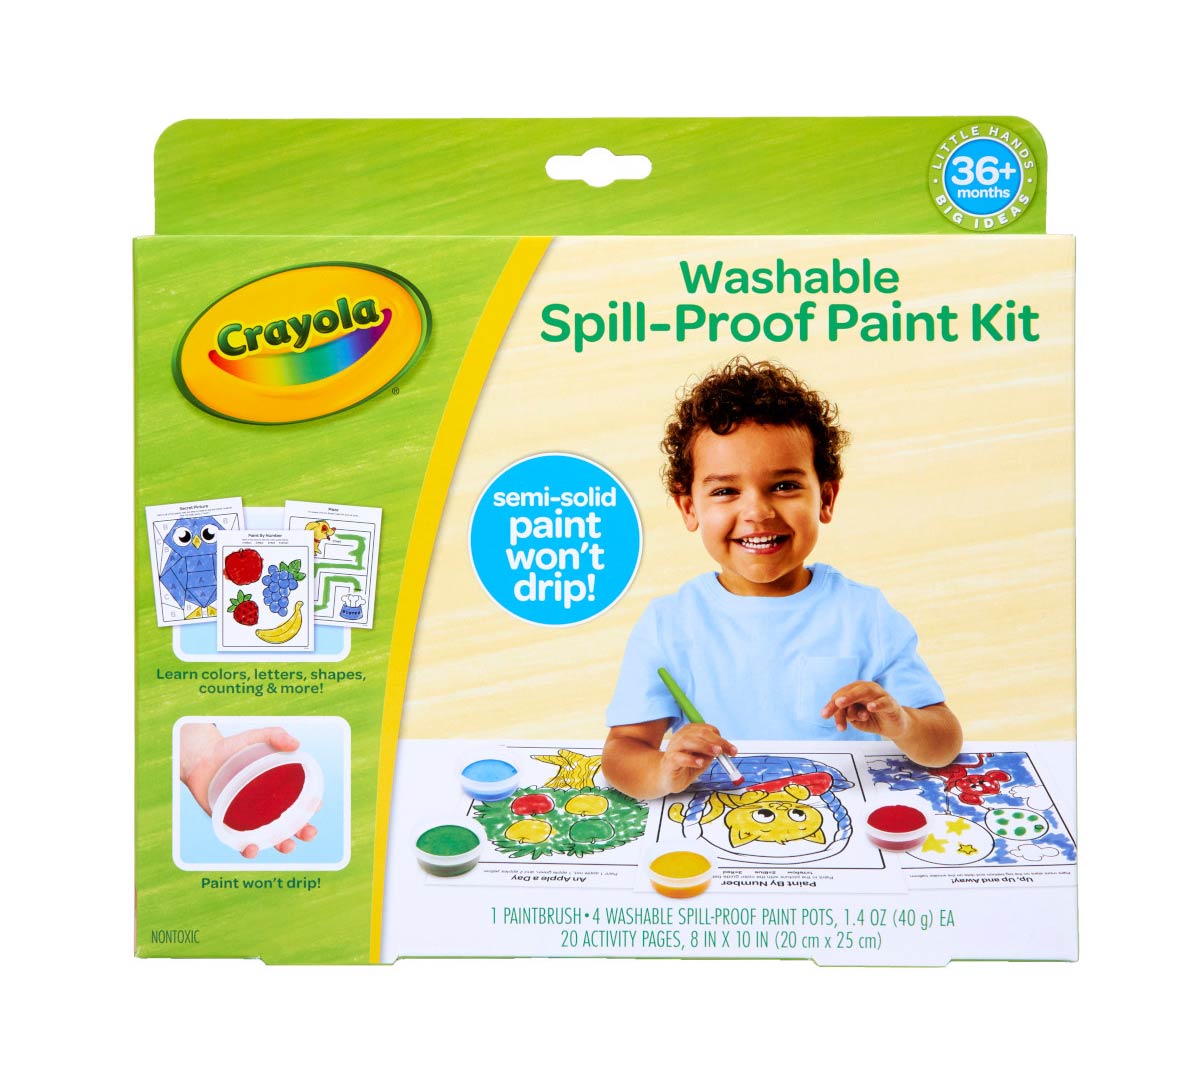 https://shop.crayola.com/on/demandware.static/-/Sites-crayola-storefront/default/dw22fef9c2/images/81-1495-0-200_Washable_Spill-Proof-Paint-Kit_F1.jpg